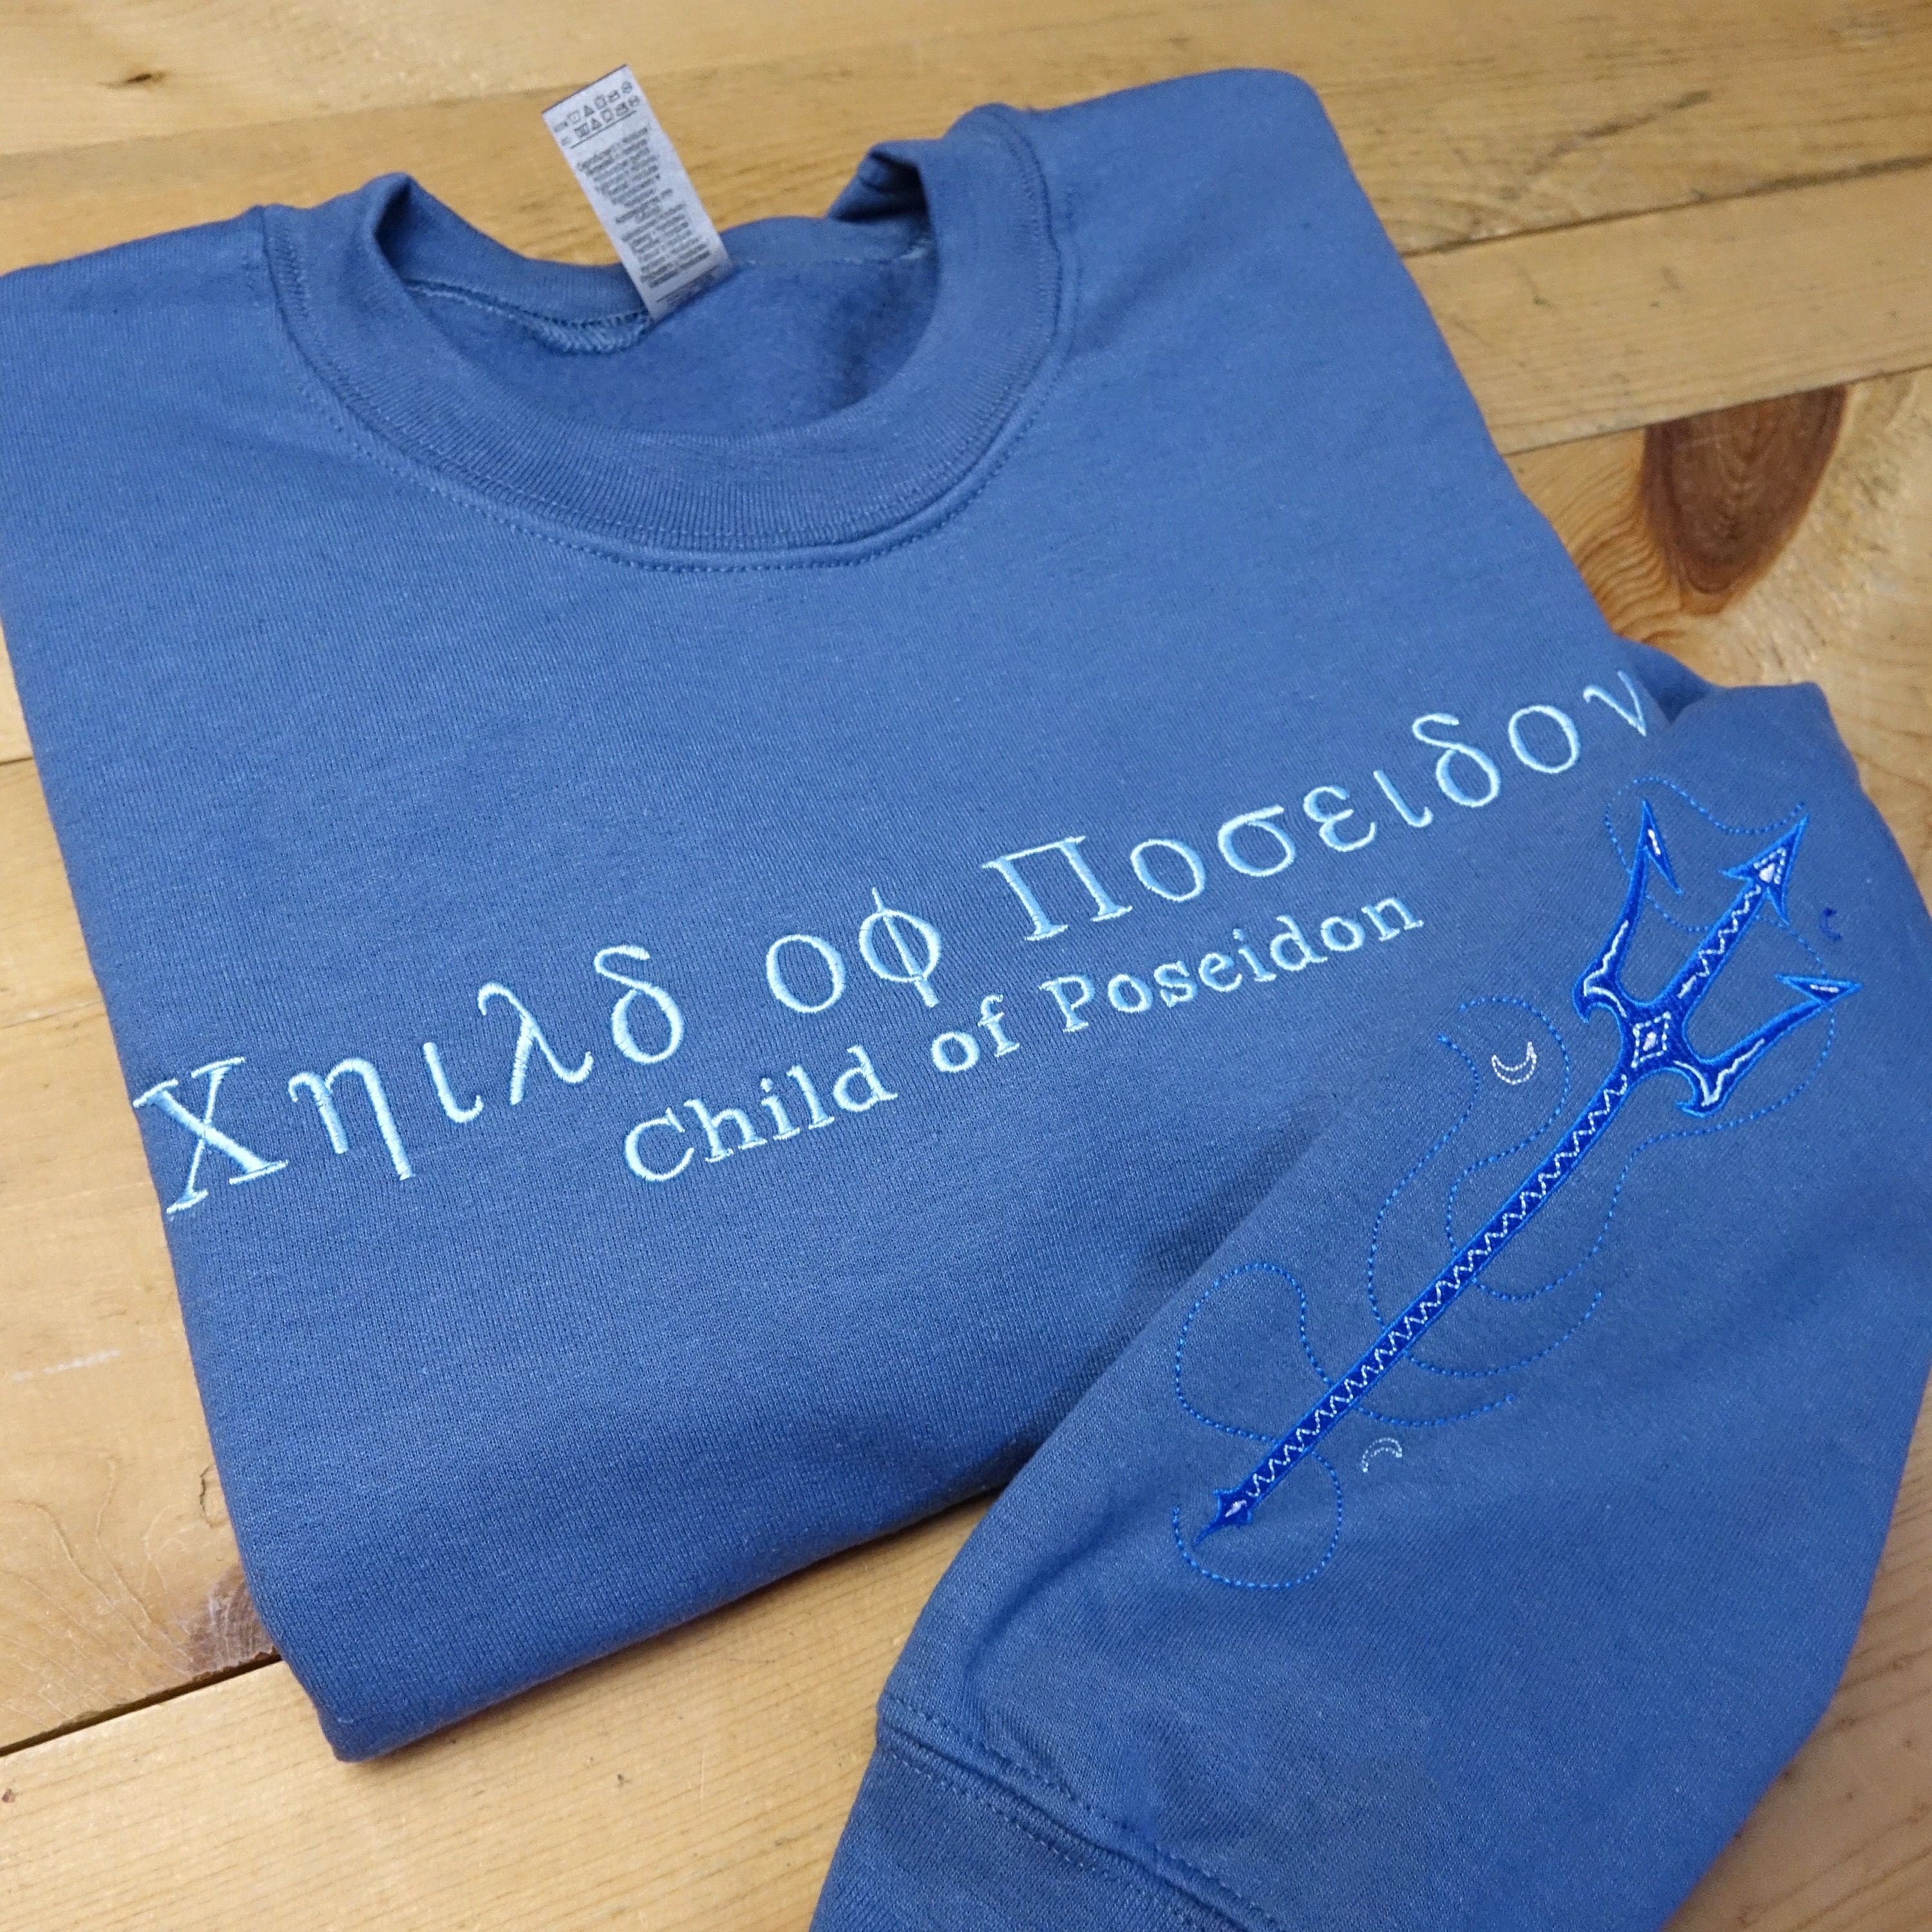  TOOLOUD Cabin 3 Poseidon Camp Half Blood Childrens T-Shirt -  Aquatic Blue - XS : Clothing, Shoes & Jewelry